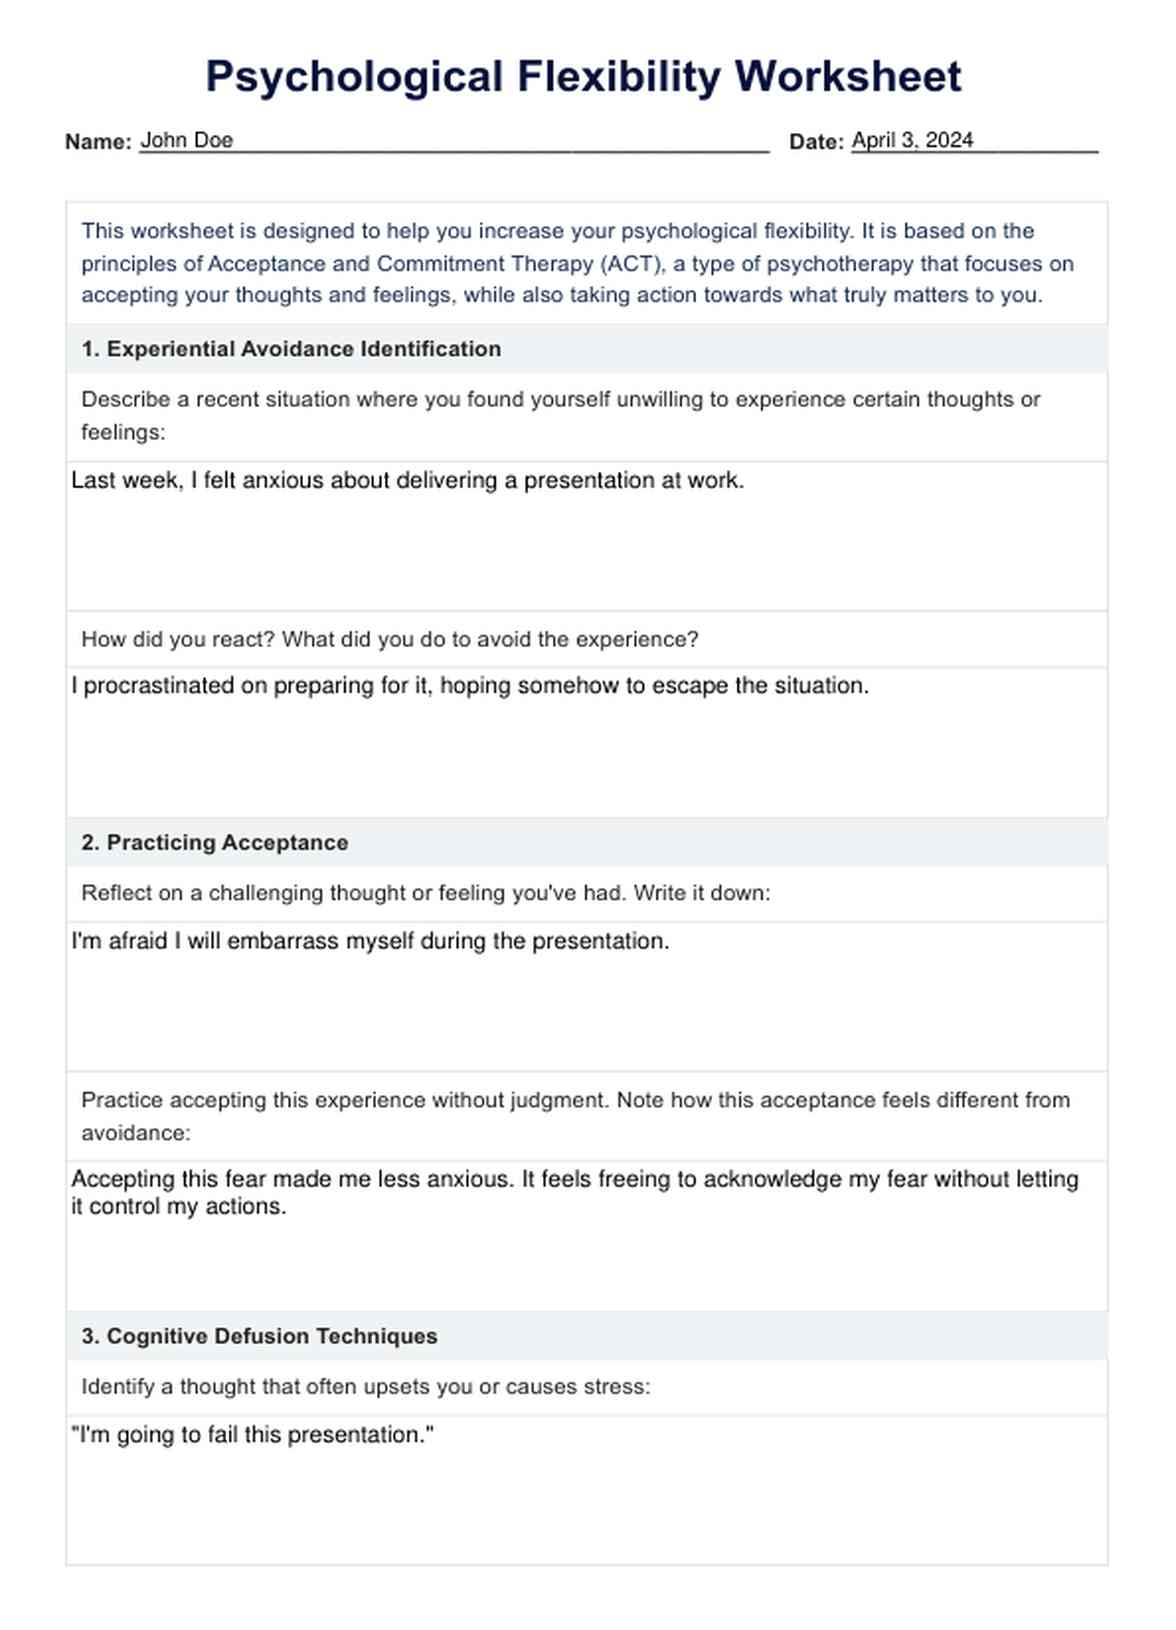 Psychological Flexibility Worksheet PDF Example